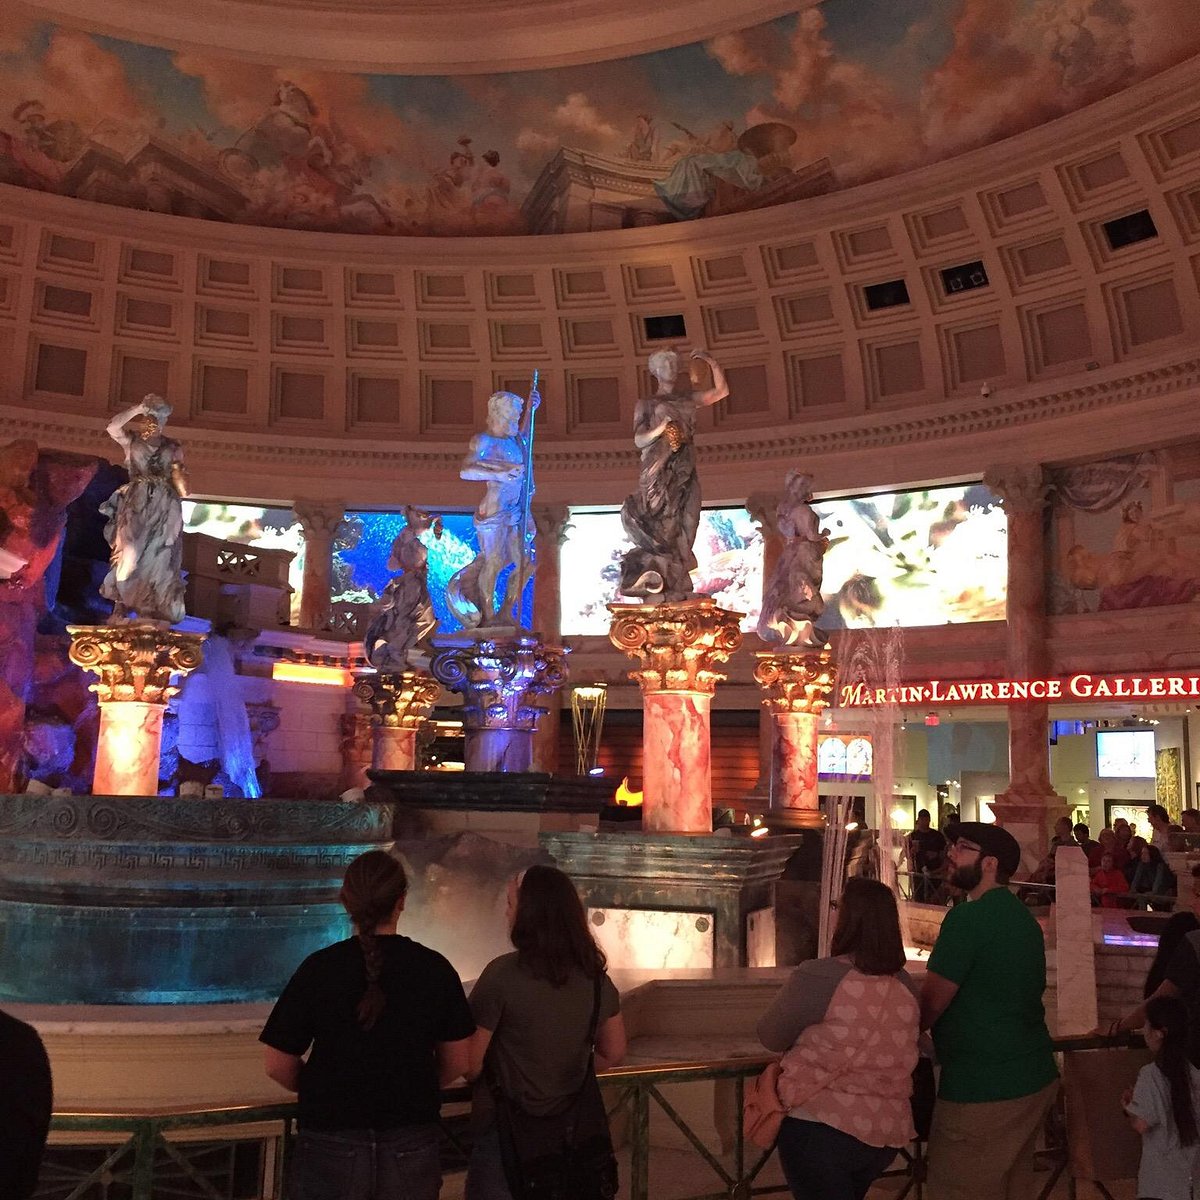 Forum fountain of the Gods - Picture of Caesars Palace Las Vegas Hotel &  Casino - Tripadvisor